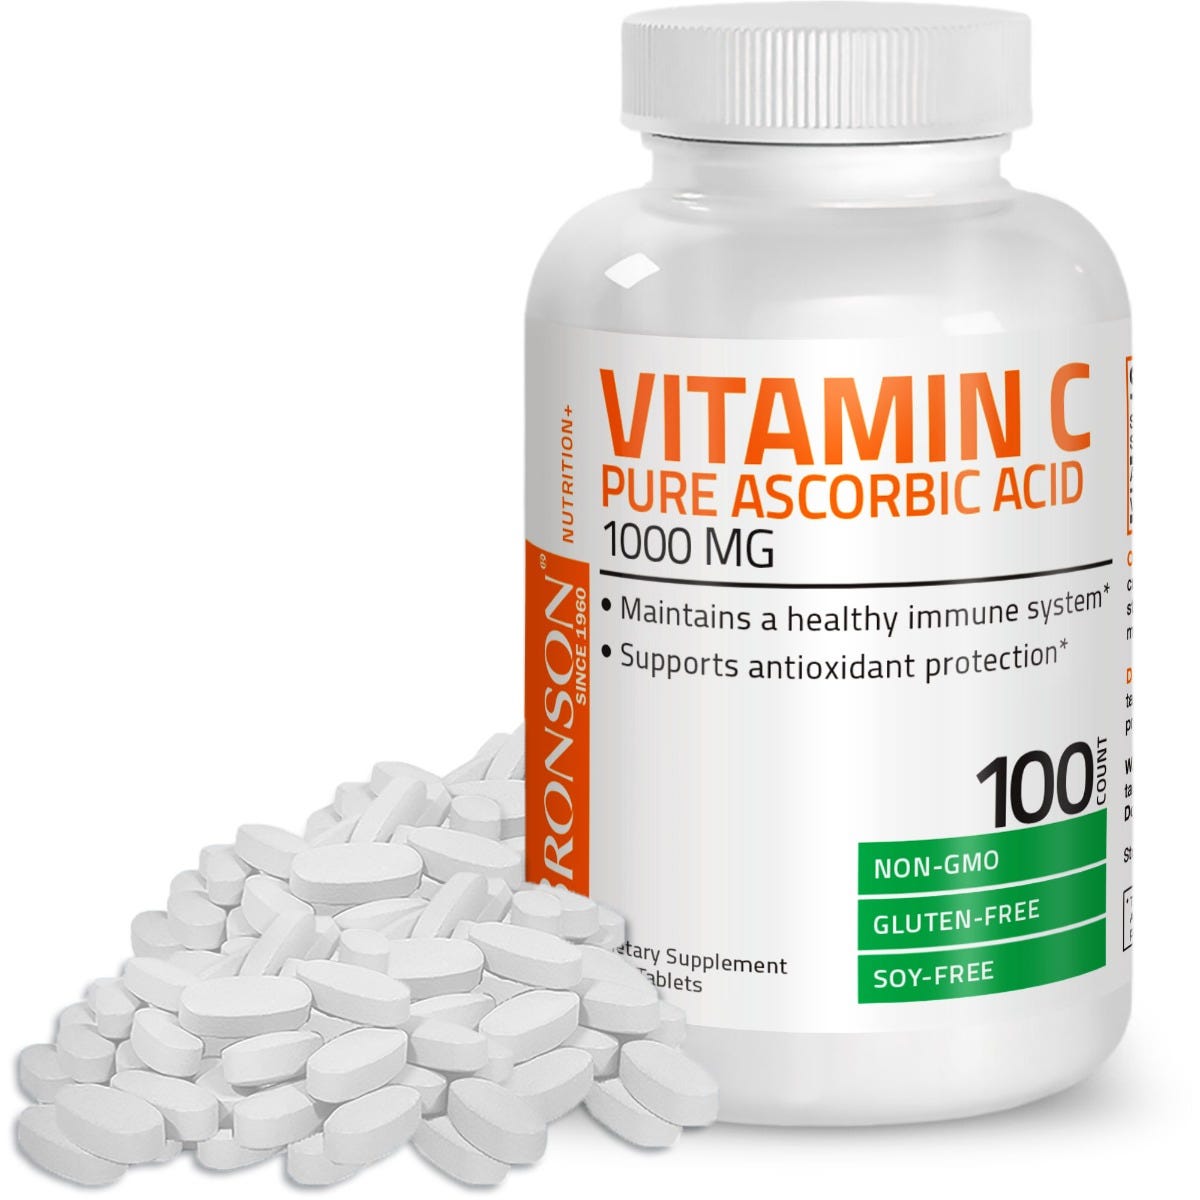 Vitamin C Pure Ascorbic Acid - 1,000 mg view 2 of 6